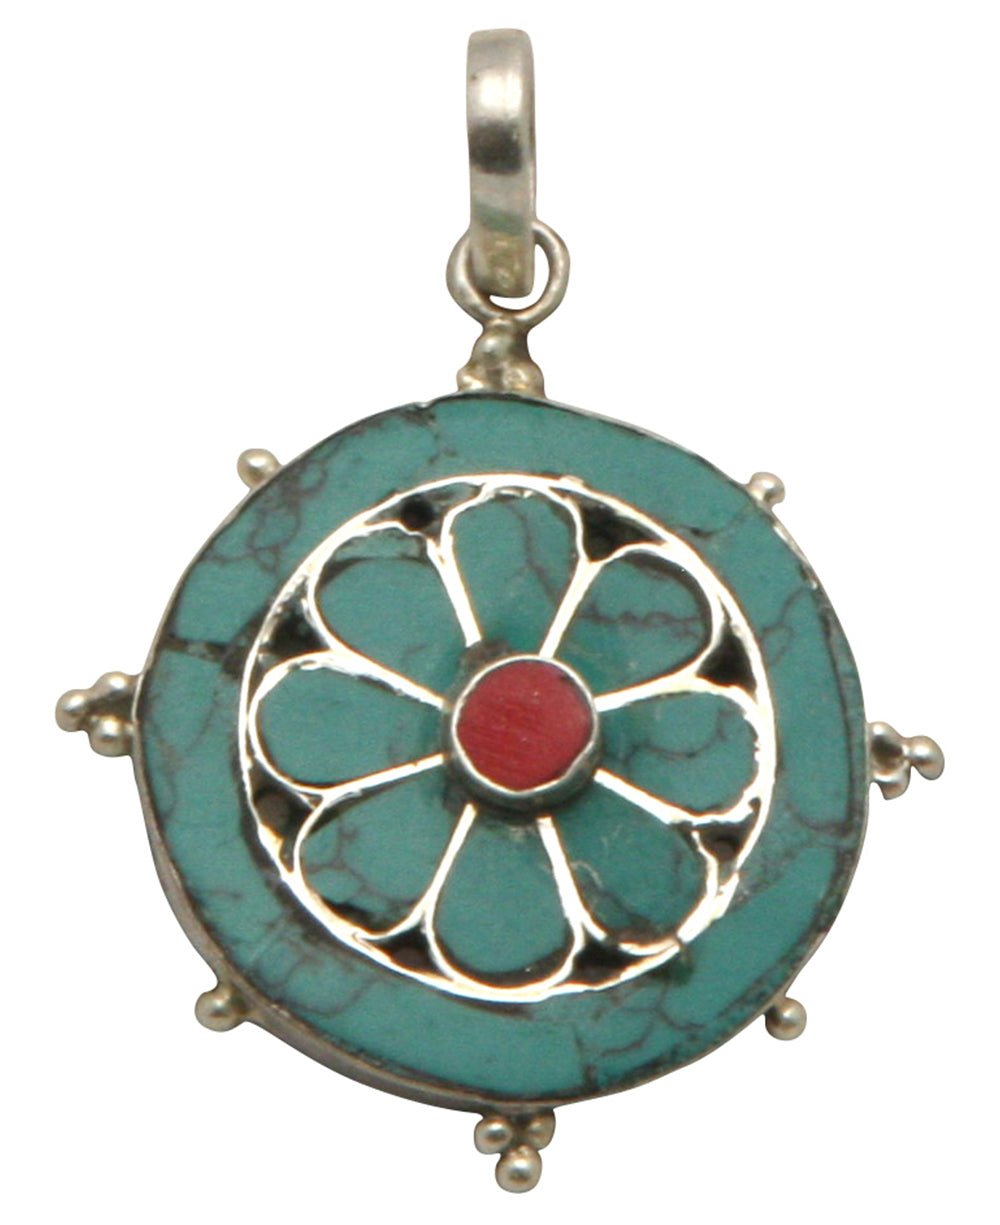 Tibetan Dharma Wheel Pendant with Reconstituted Turquoise - Jewelry